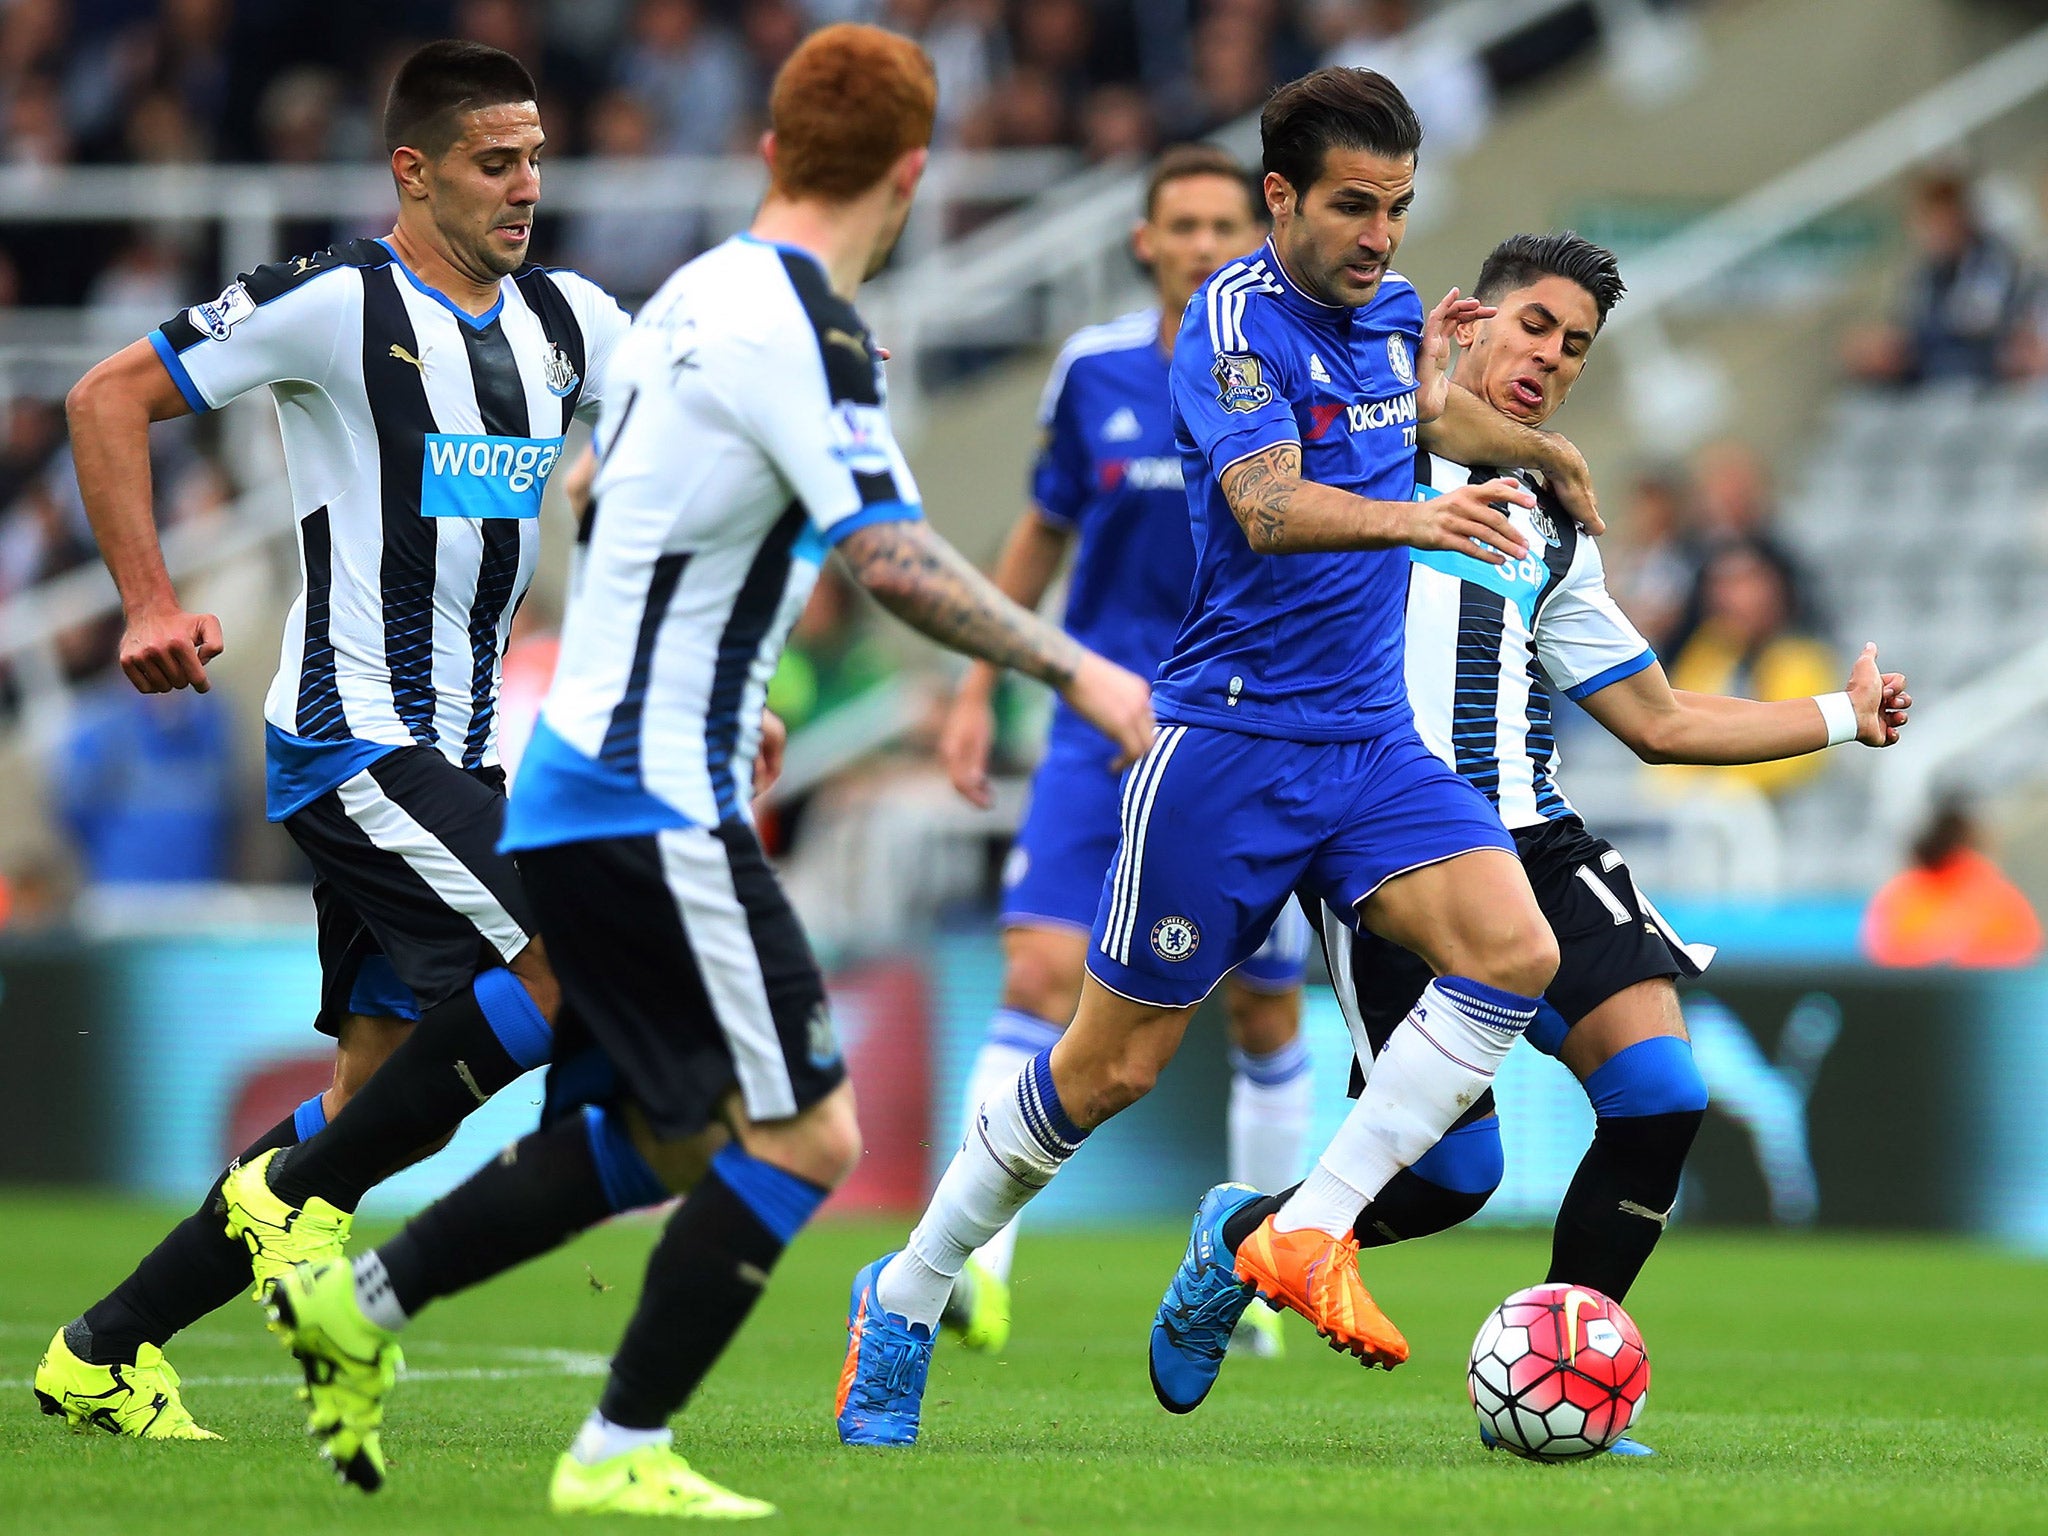 Cesc Fabregas tries to evade several Newcastle players